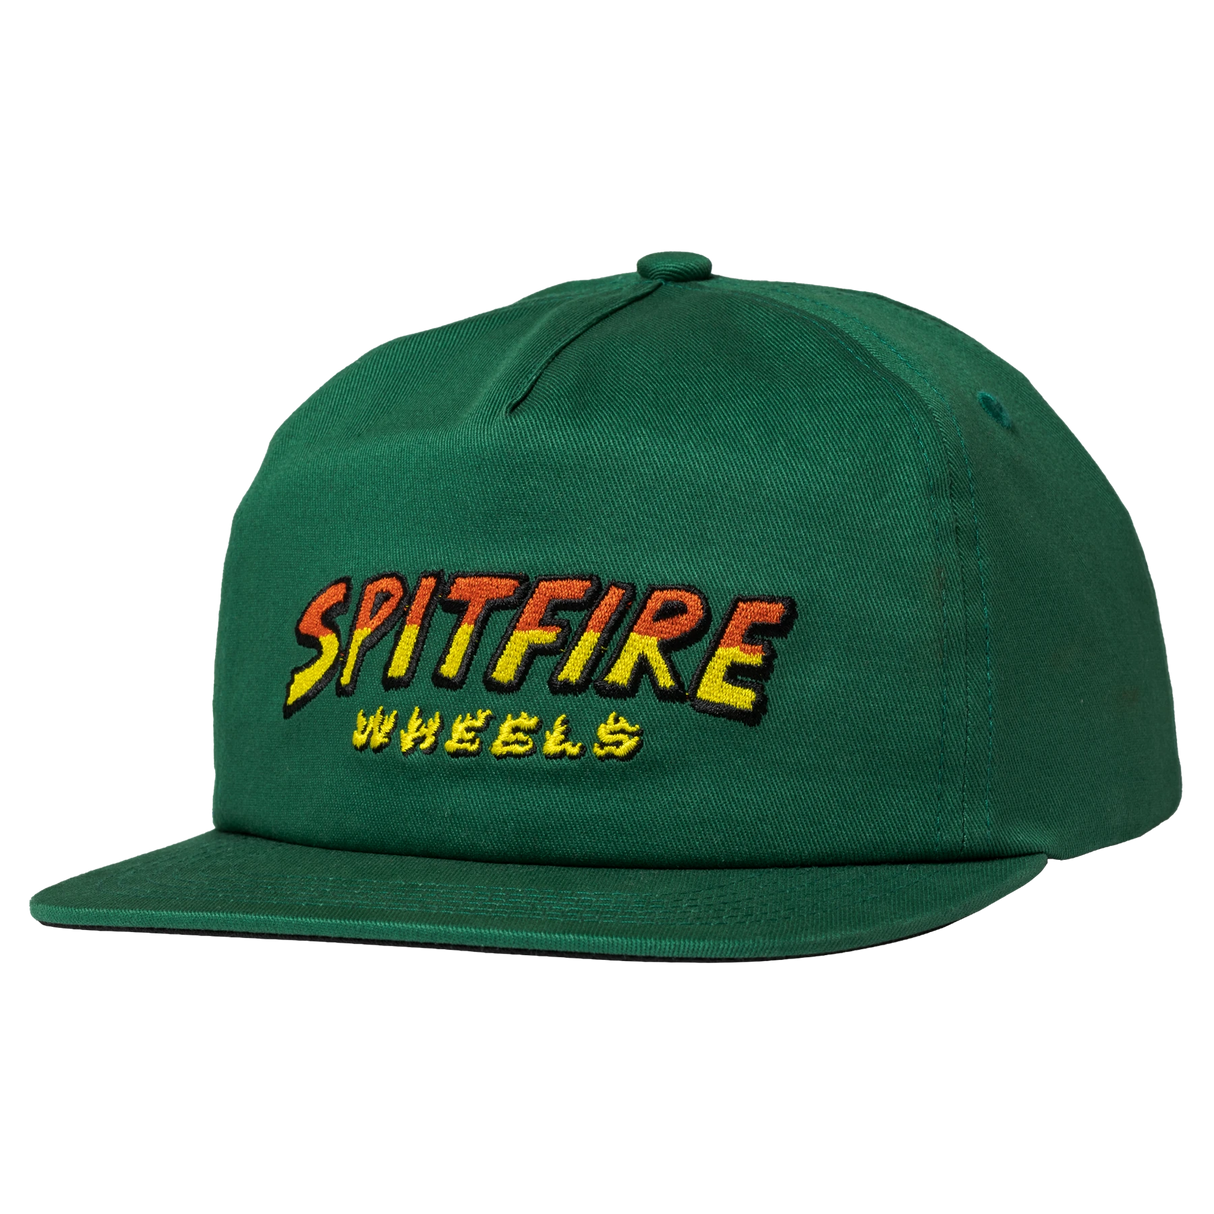 Spitfire Hell Hounds Script Patch Dark Green Snapback Hat